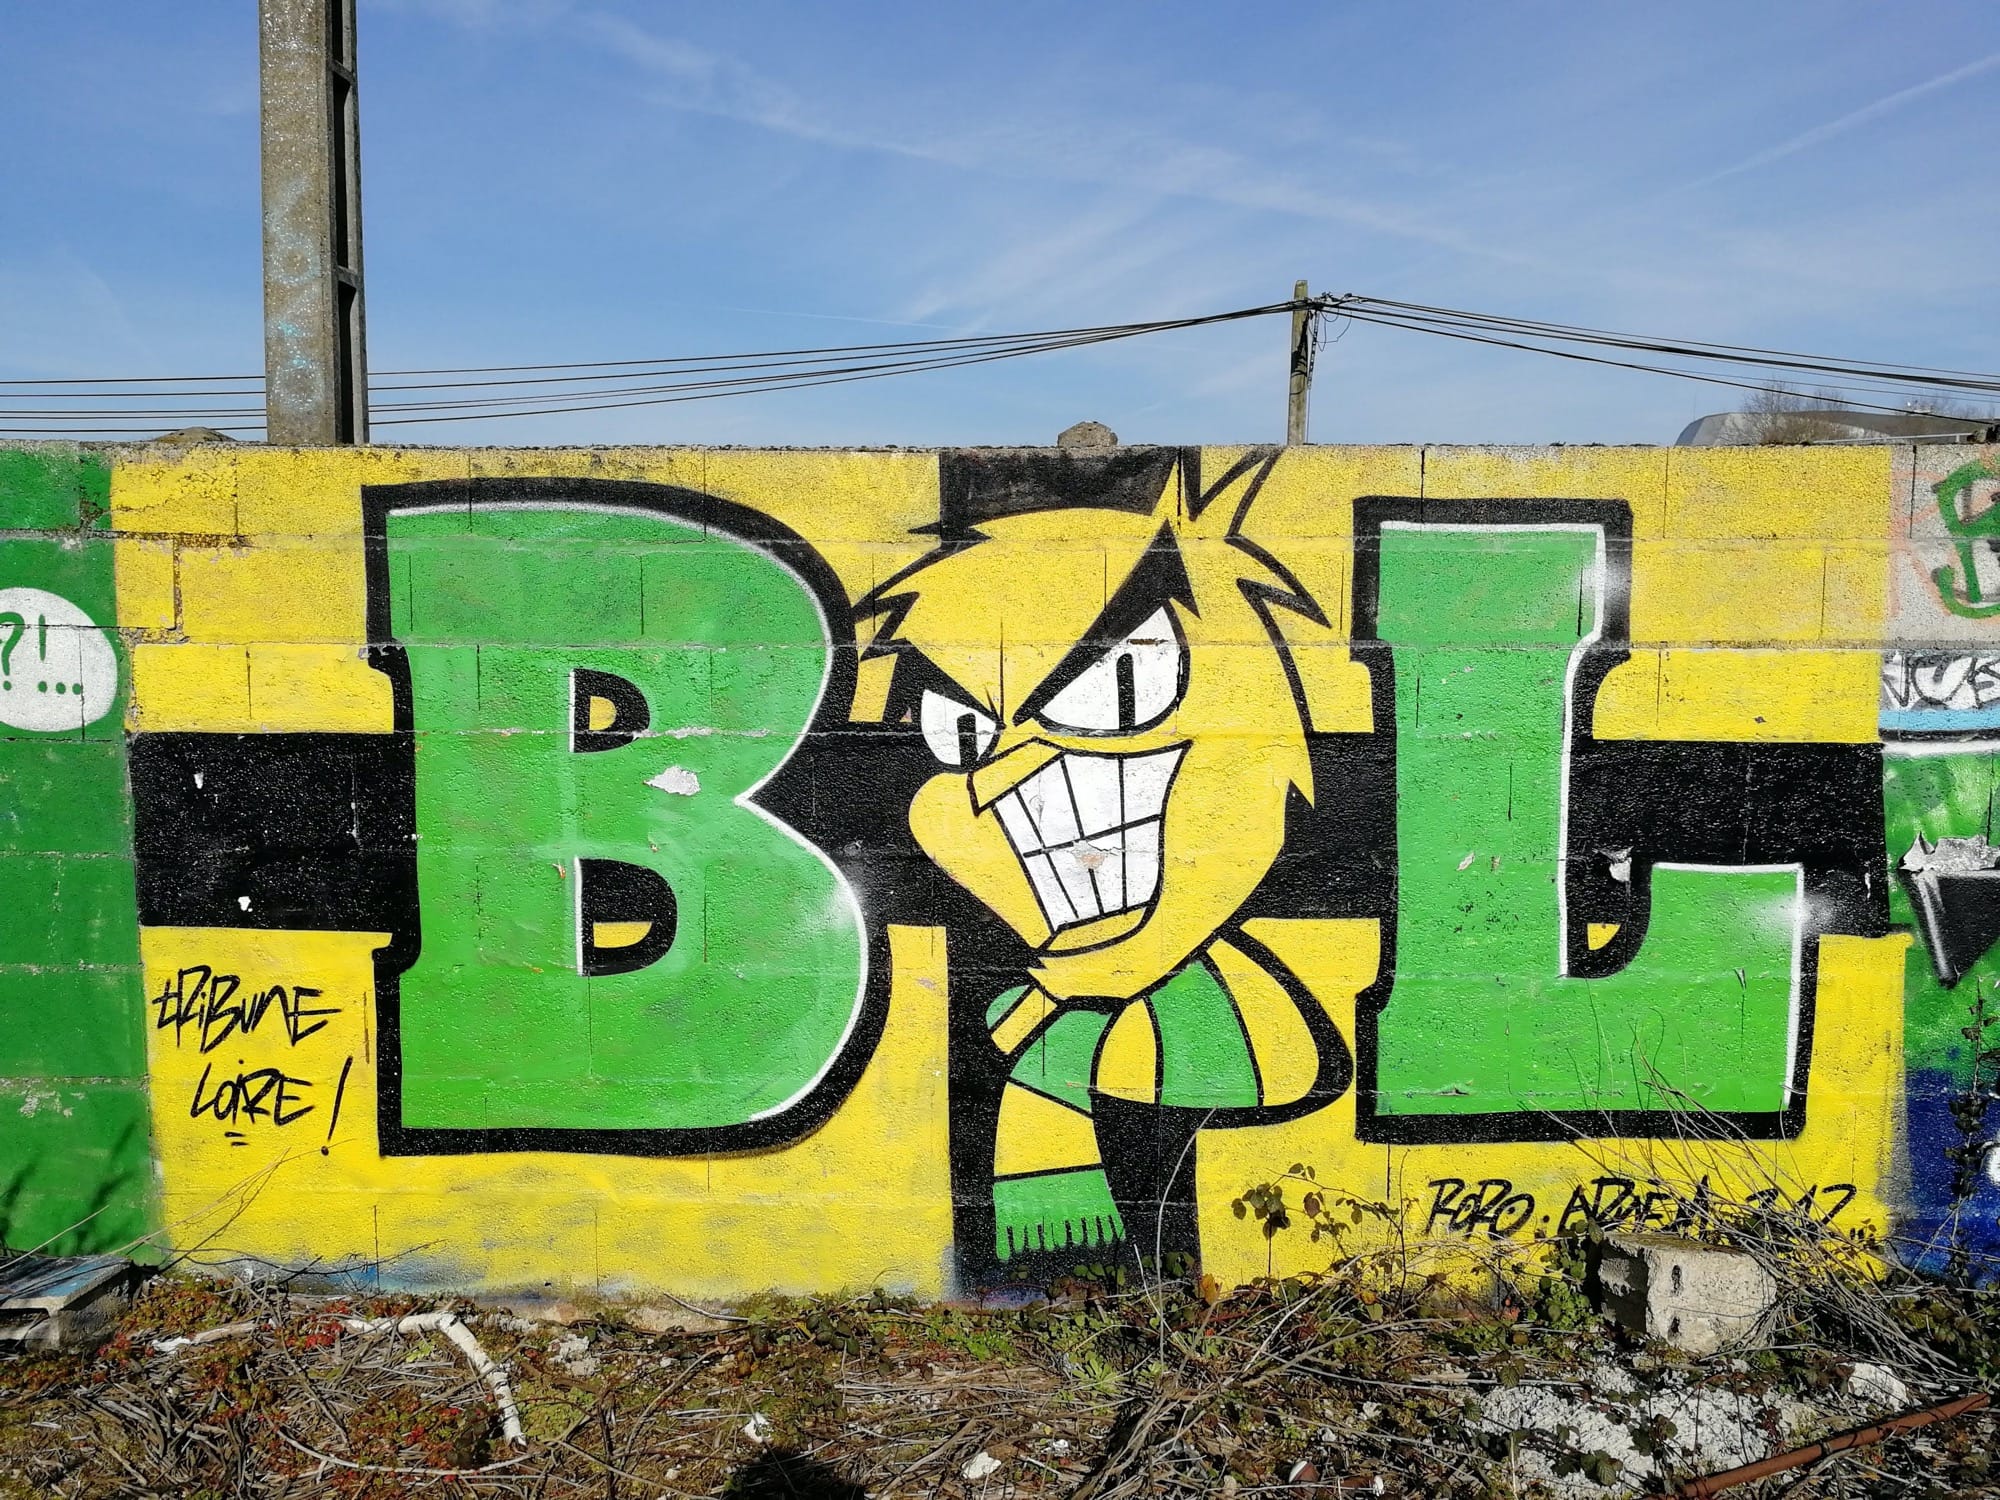 Graffiti 865 Brigade Loire FC Nantes captured by Rabot in Nantes France